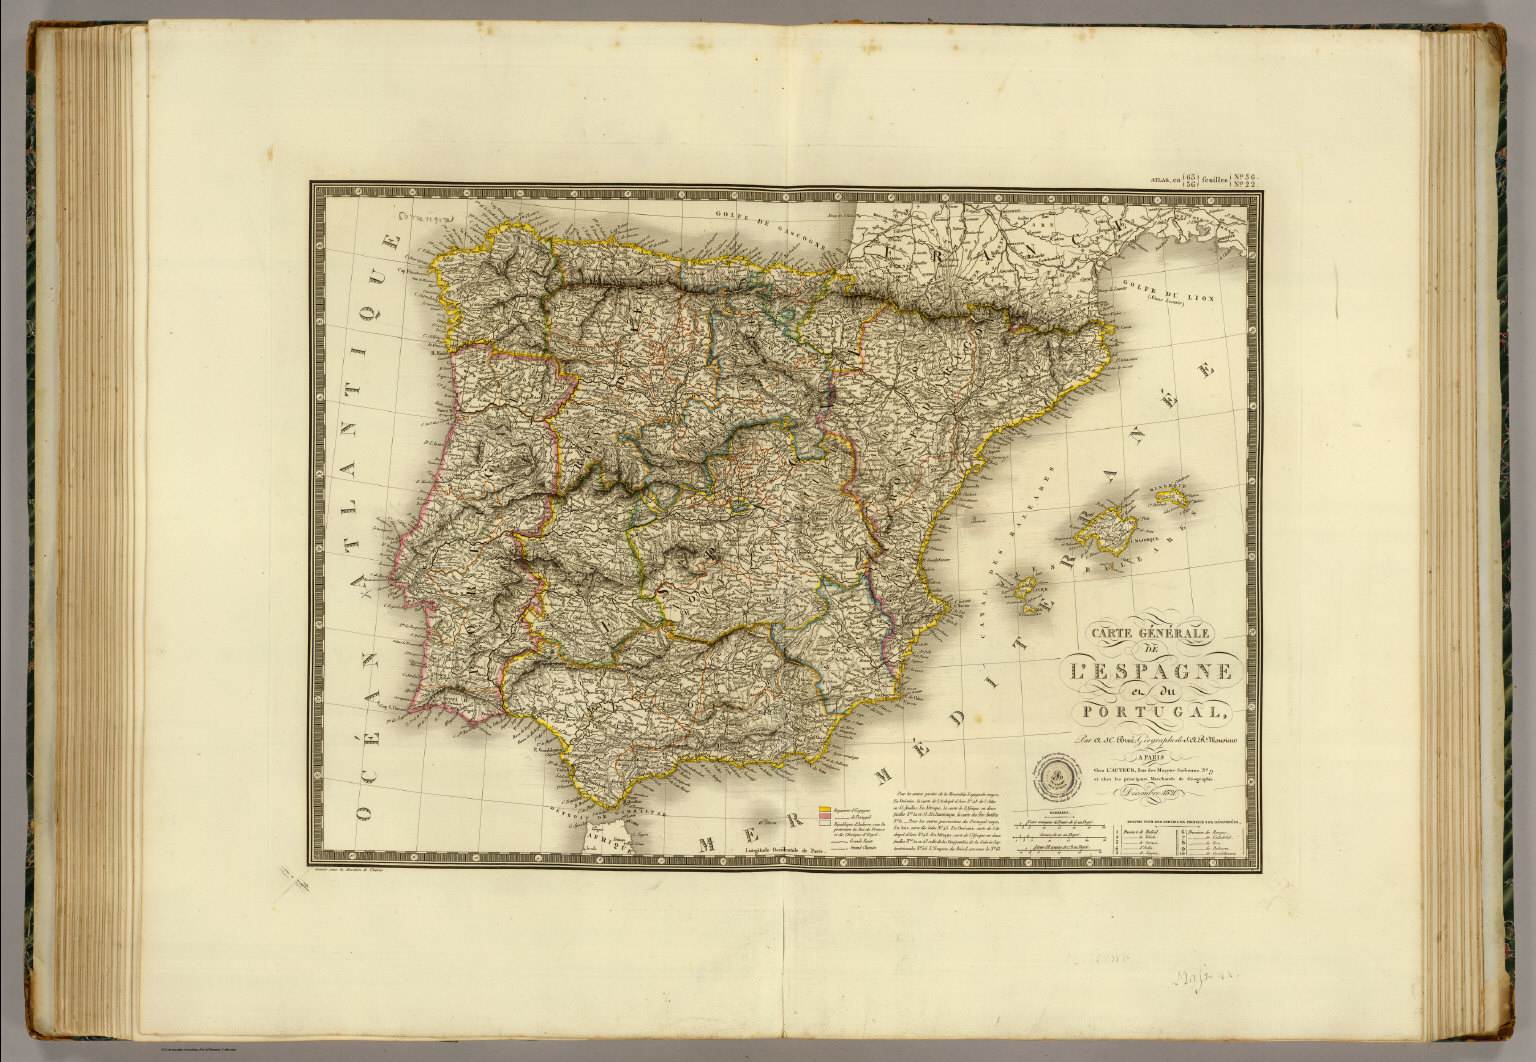 Mapa de carreteras de España  Mapas de carreteras, Mapa de carreteras  españa, Carreteras españa